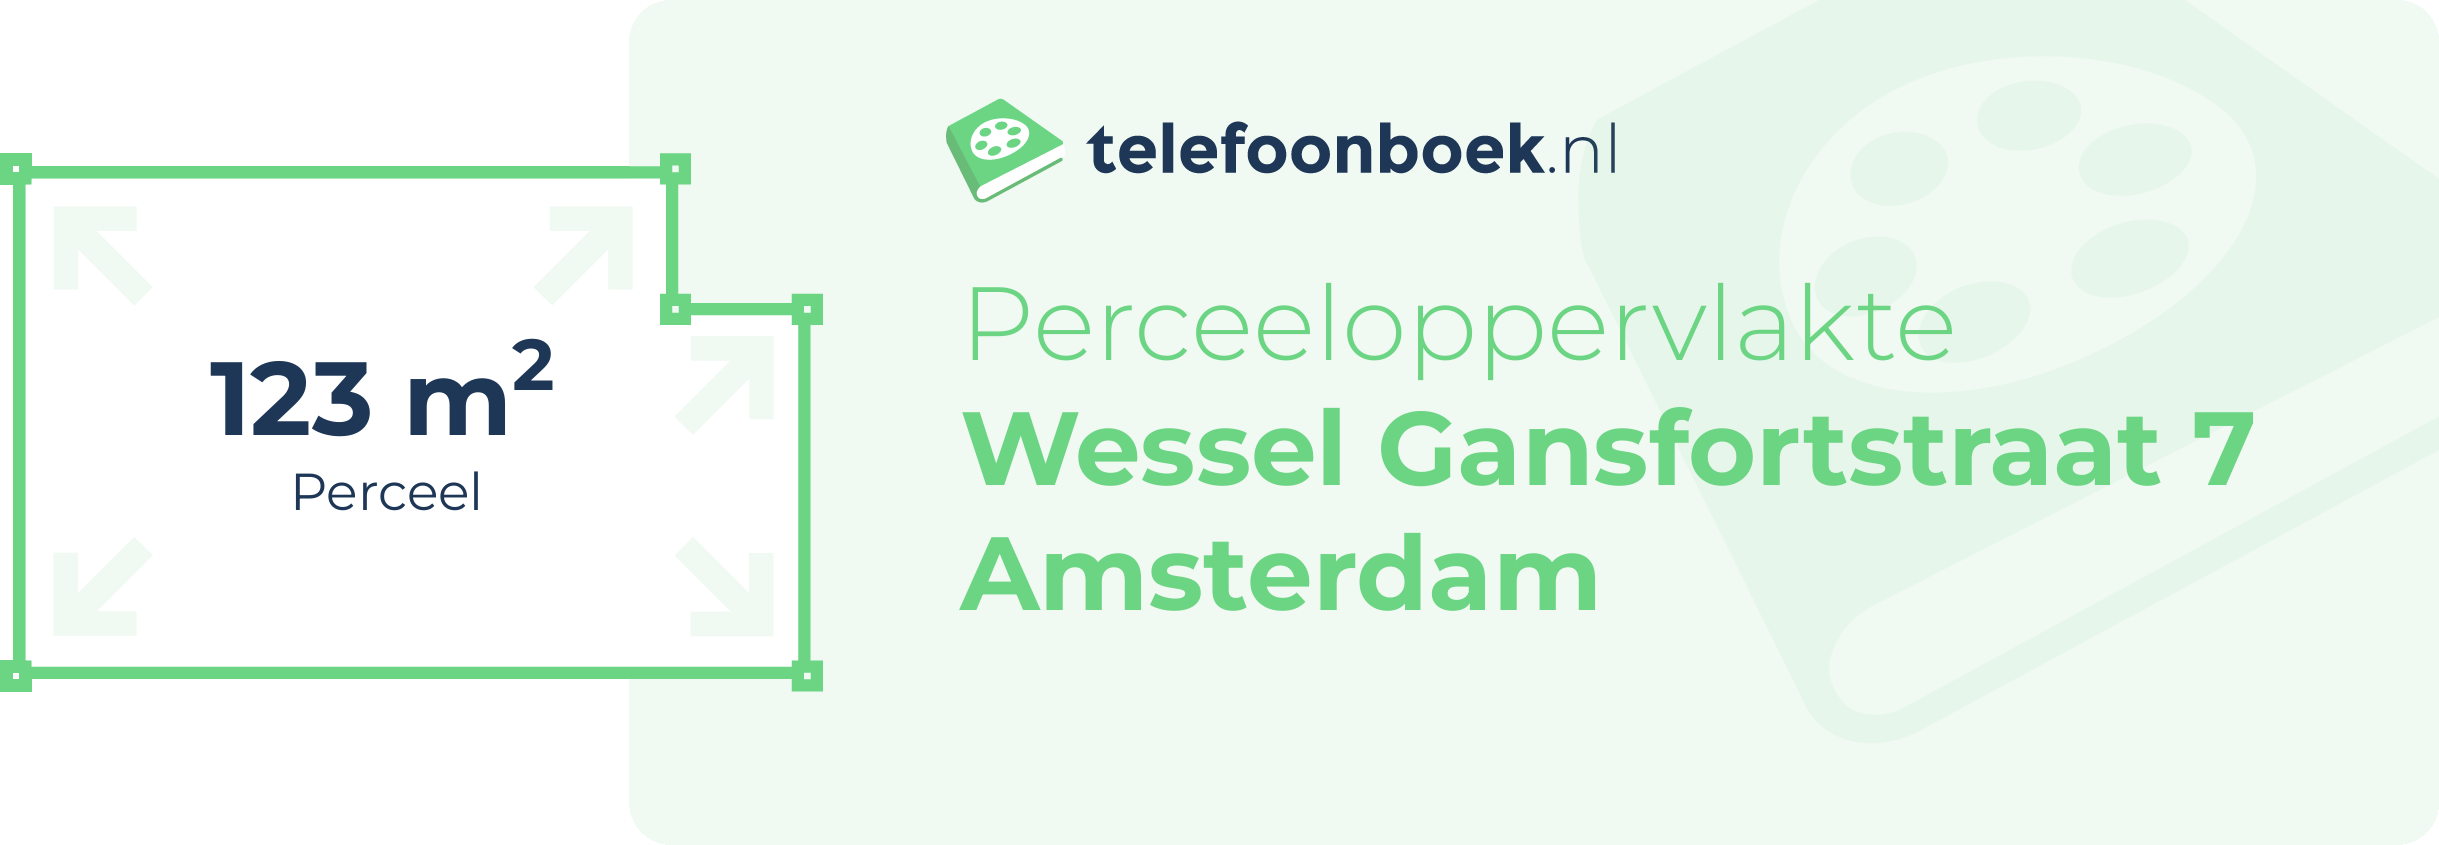 Perceeloppervlakte Wessel Gansfortstraat 7 Amsterdam